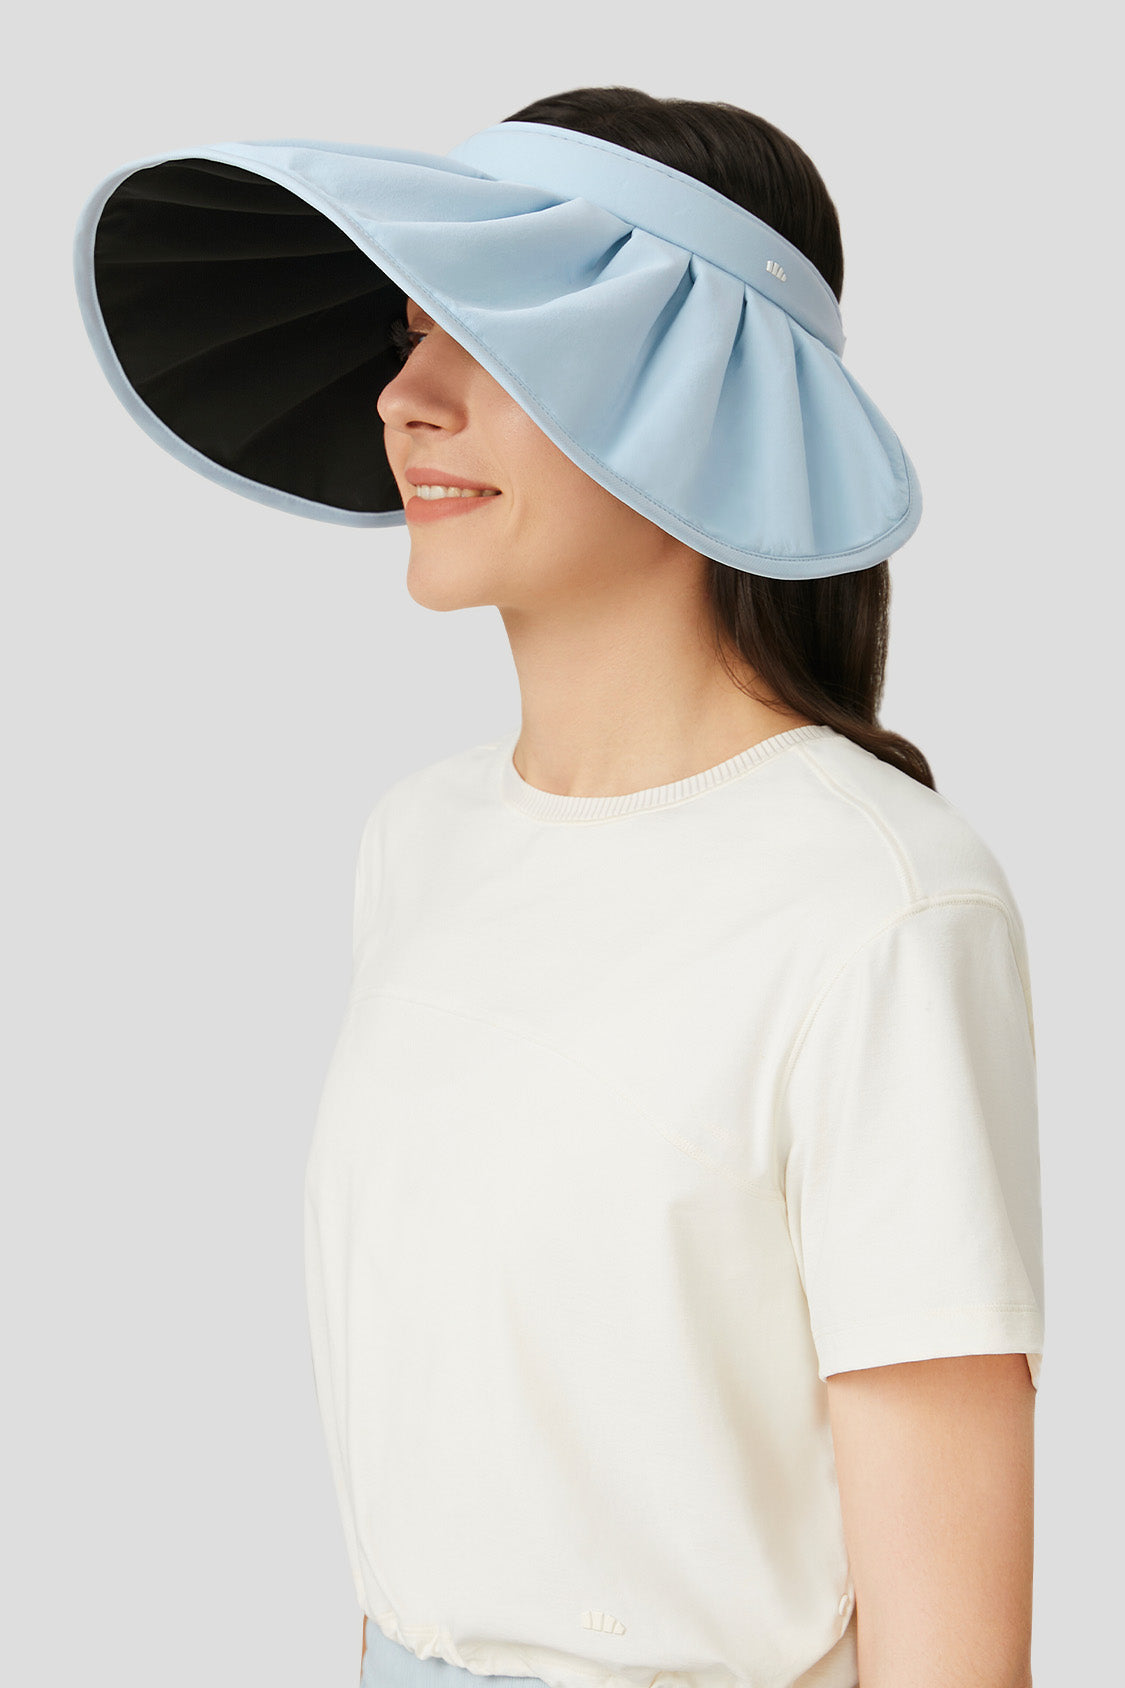 Sun Protection Hat for Women, Beneunder UPF50+ Packable Wide Brim UV Protection Sun Visor Hat Nordic Gray / One Size - Adjustable 55-58cm